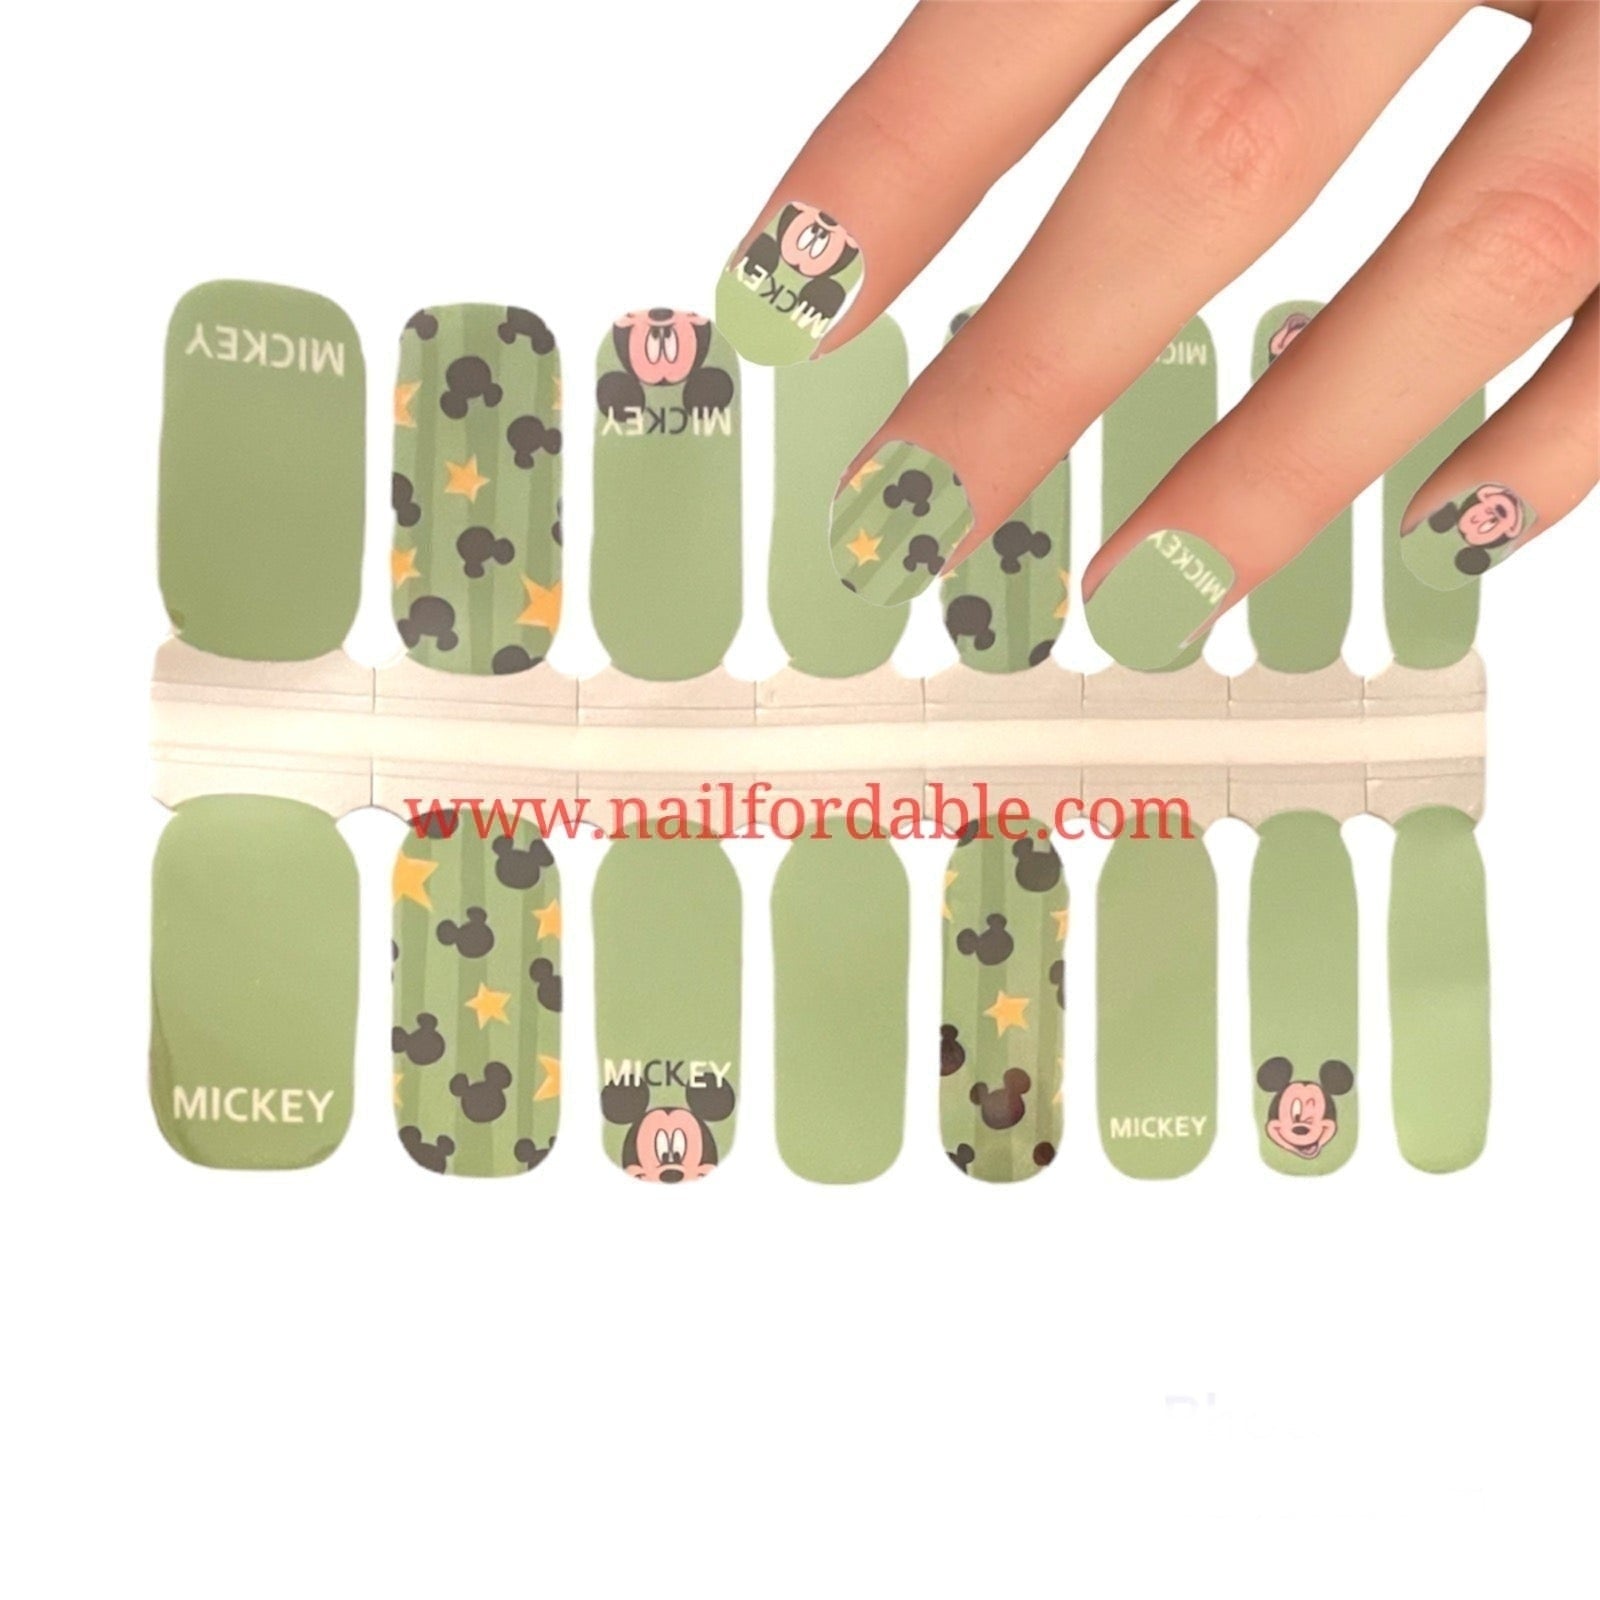 Disney - Mickey on green Nail Wraps | Semi Cured Gel Wraps | Gel Nail Wraps |Nail Polish | Nail Stickers